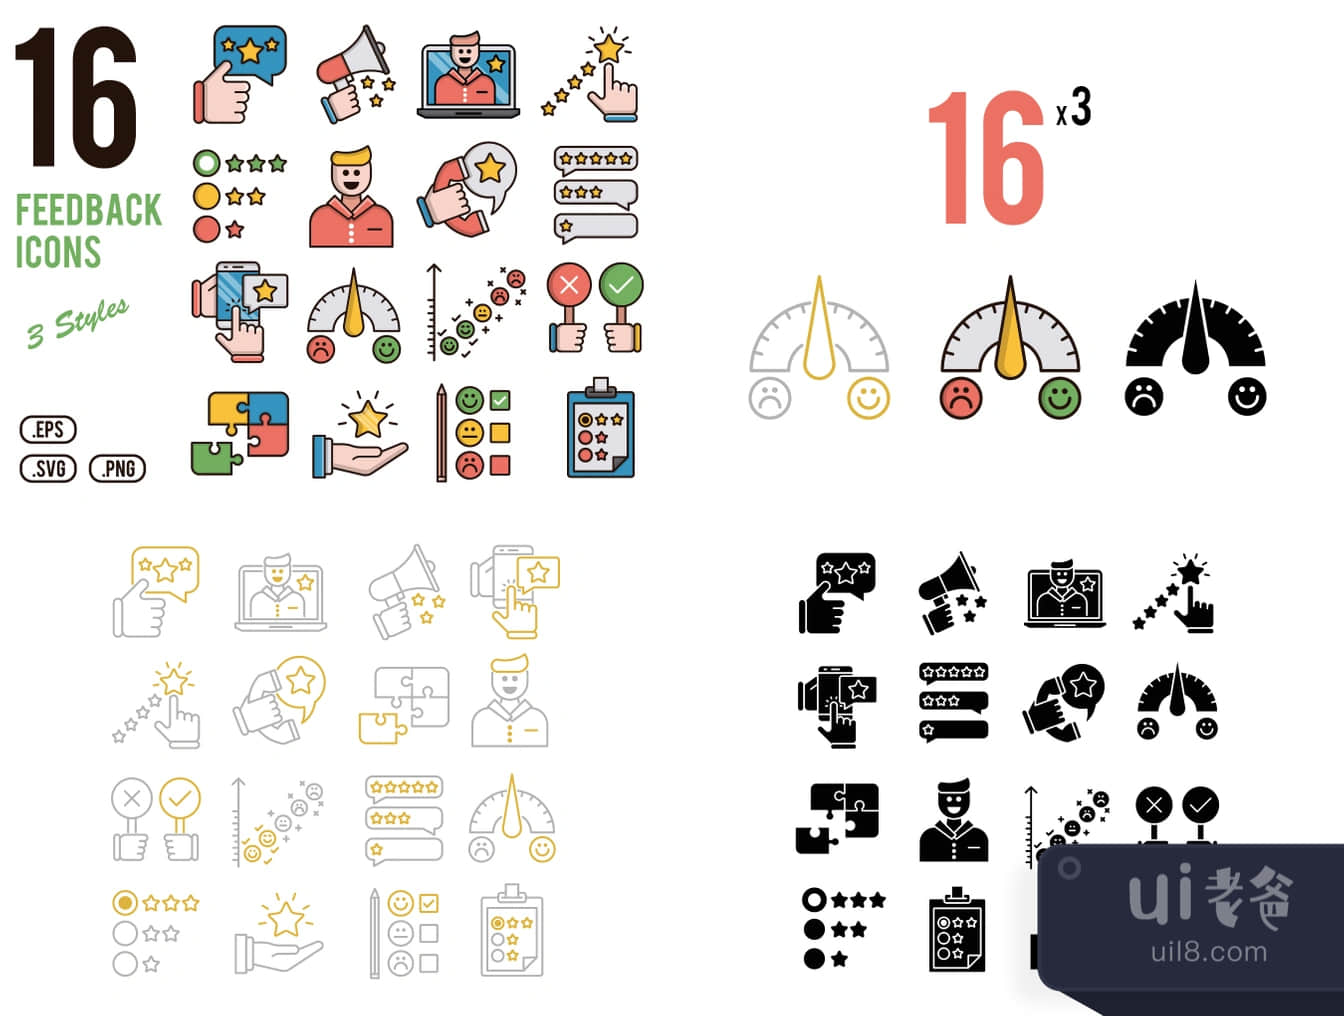 16个反馈图标 (16 Feedback Icons)插图